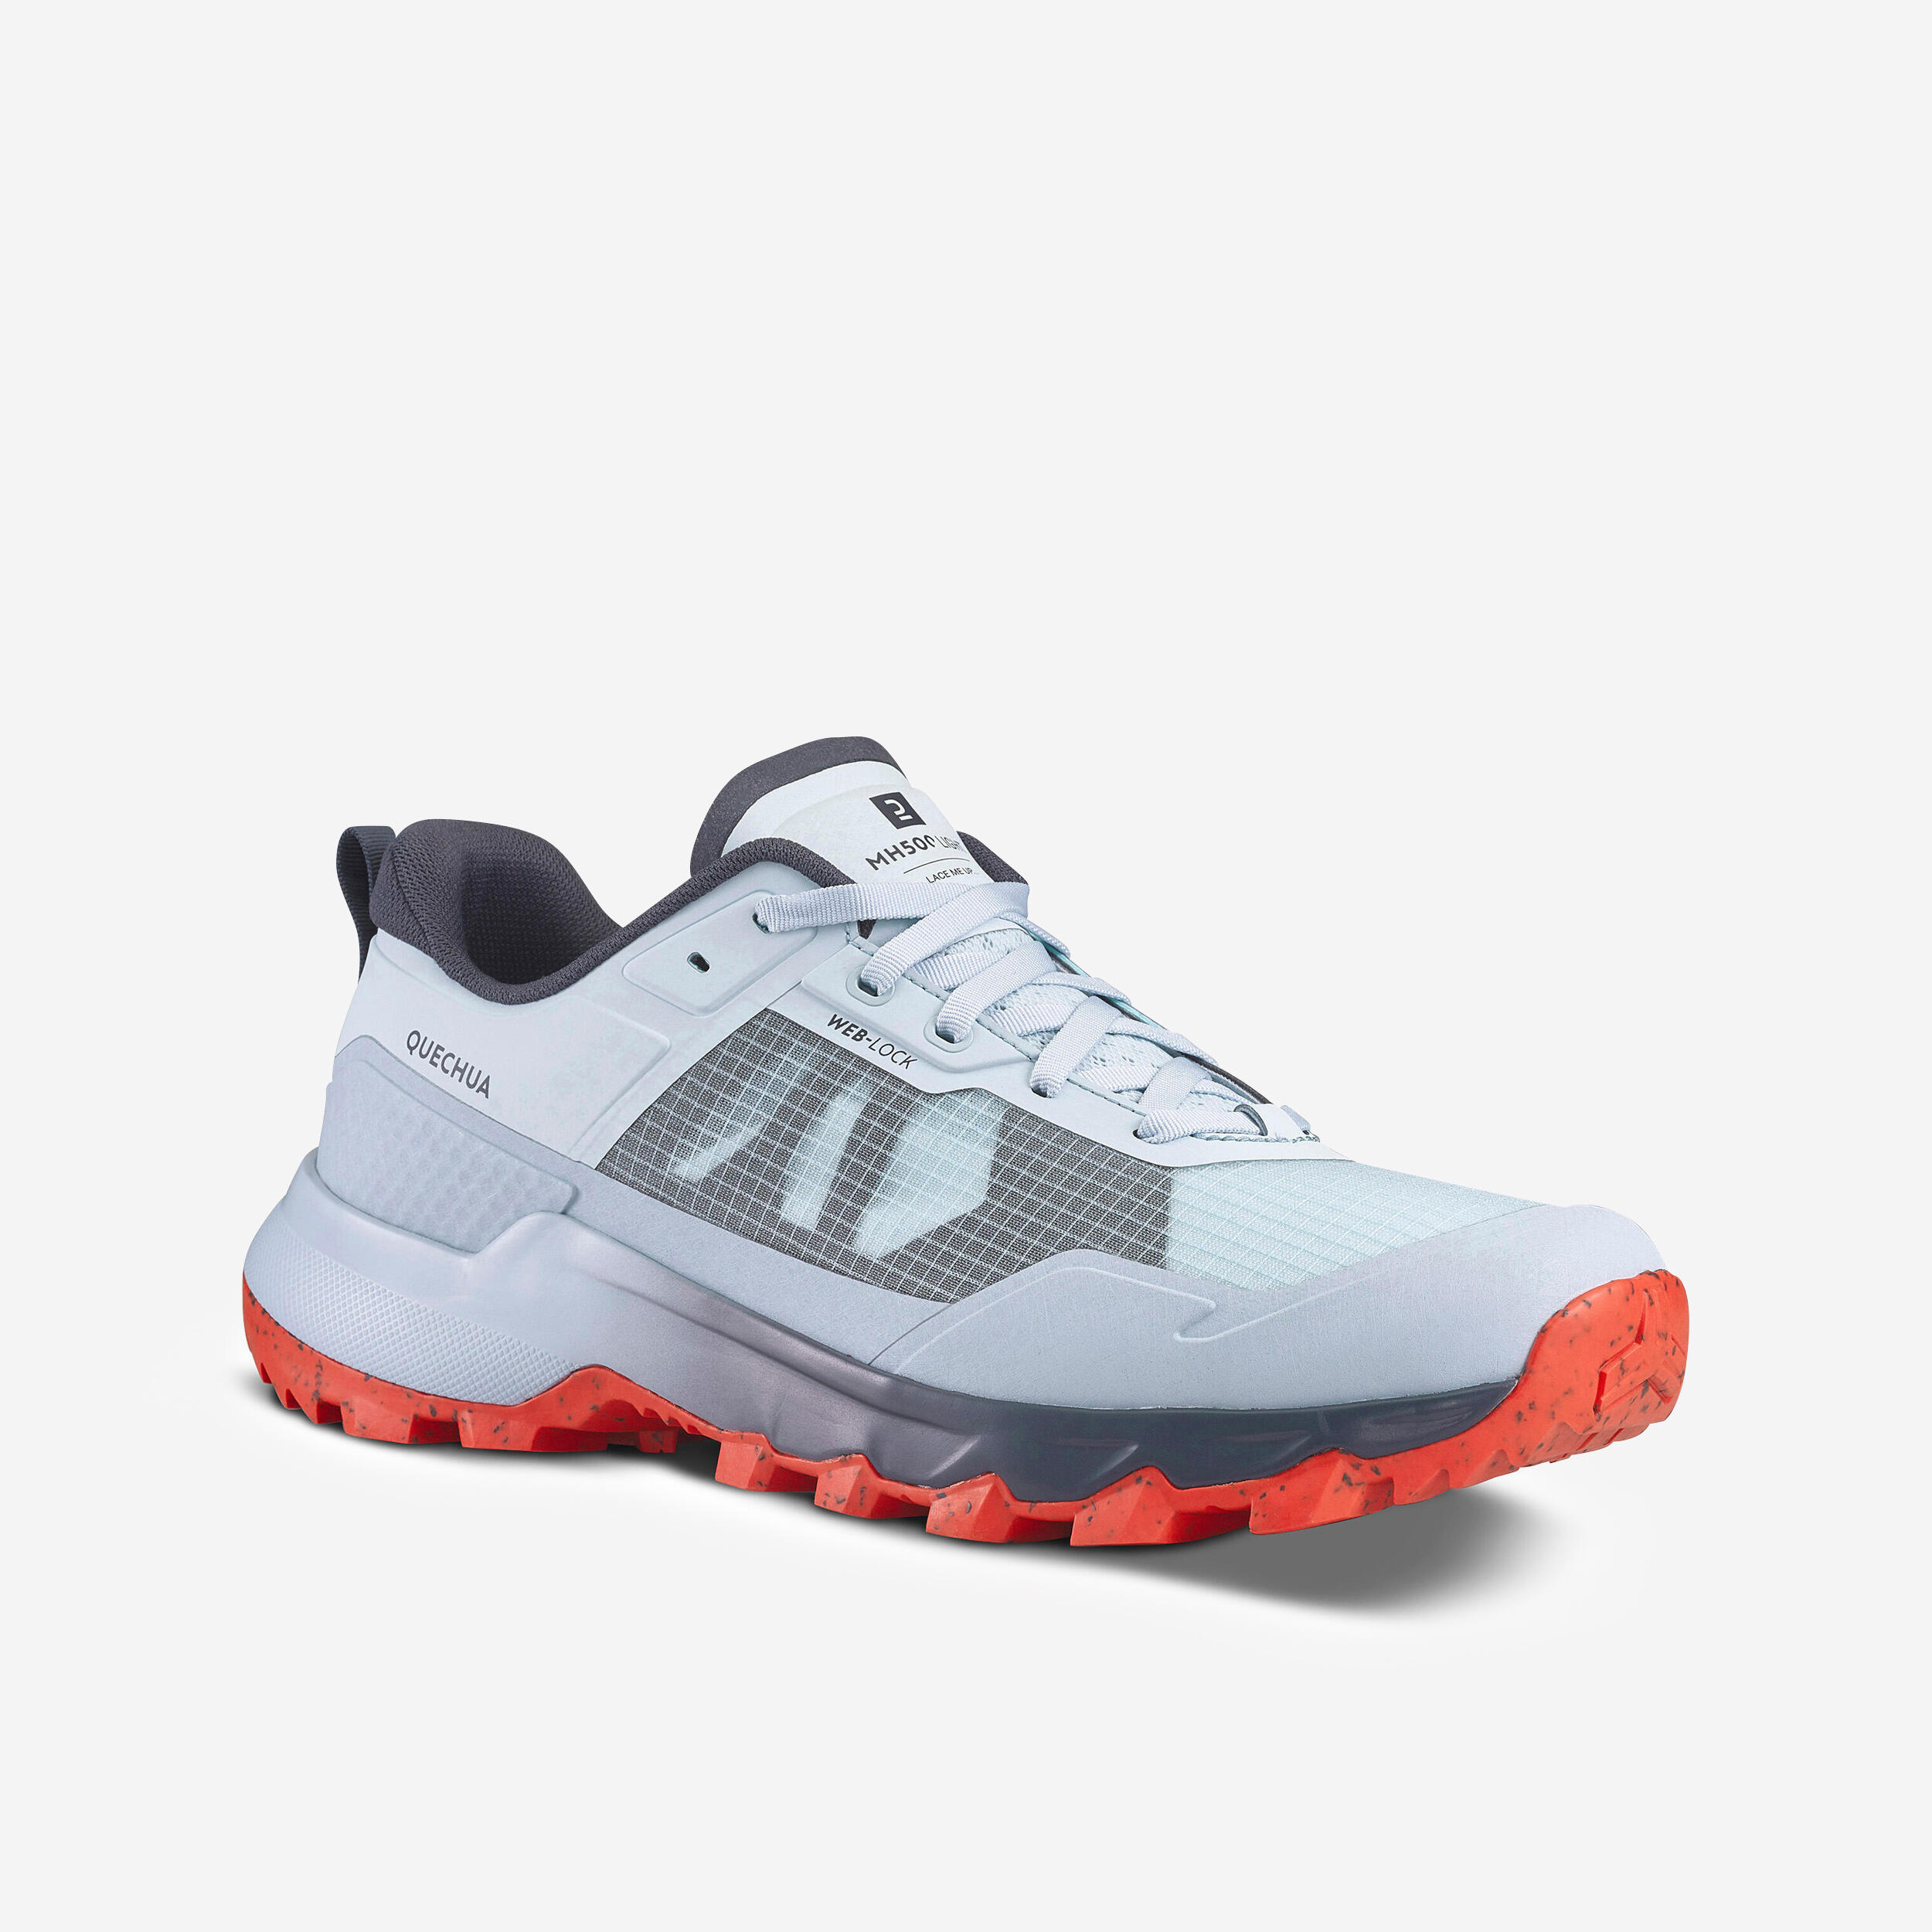 Men’s mountain Hiking Shoes - MH500 LIGHT - Light Grey 1/8